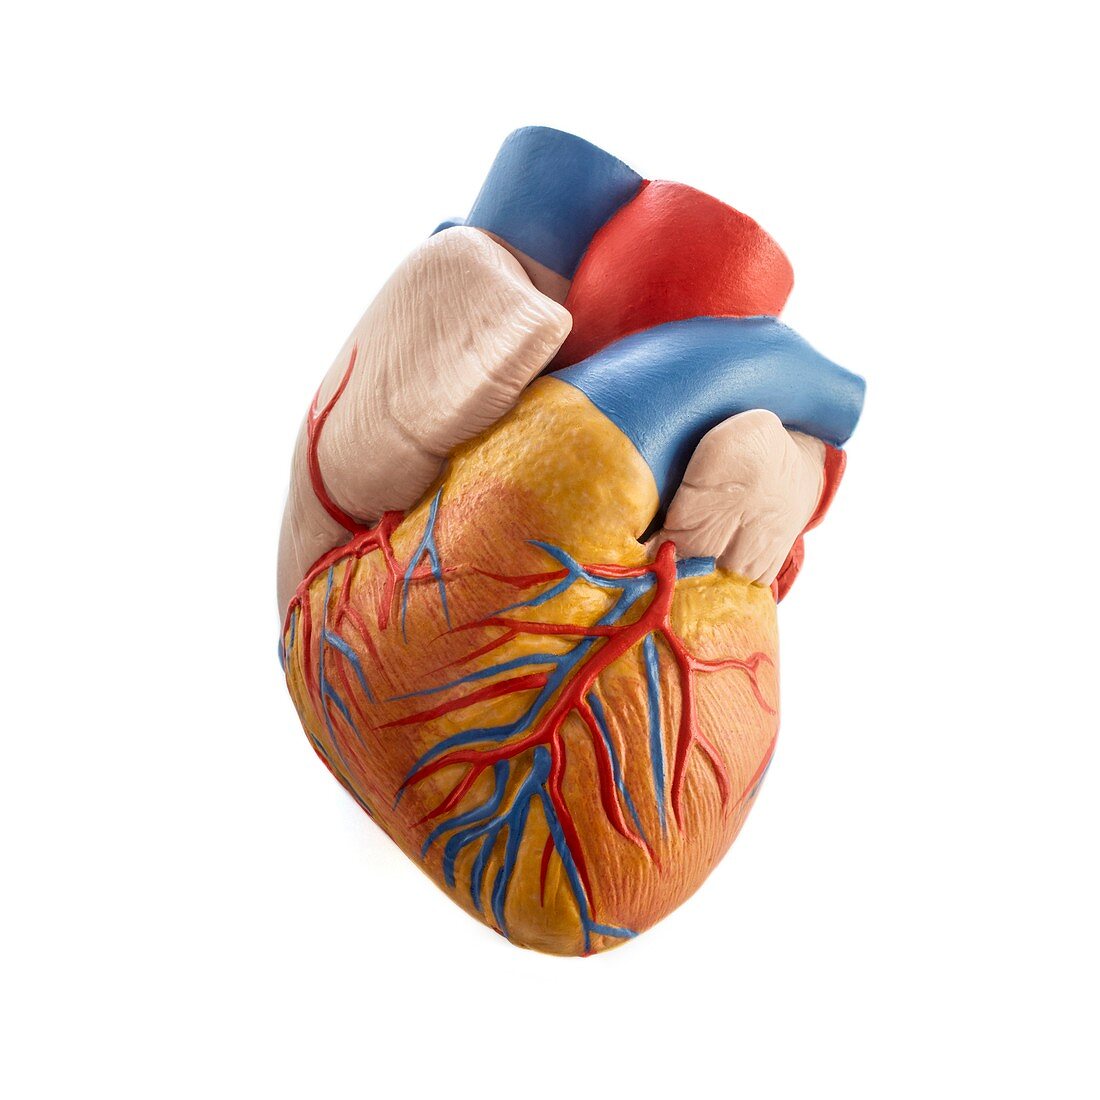 Heart anatomy model